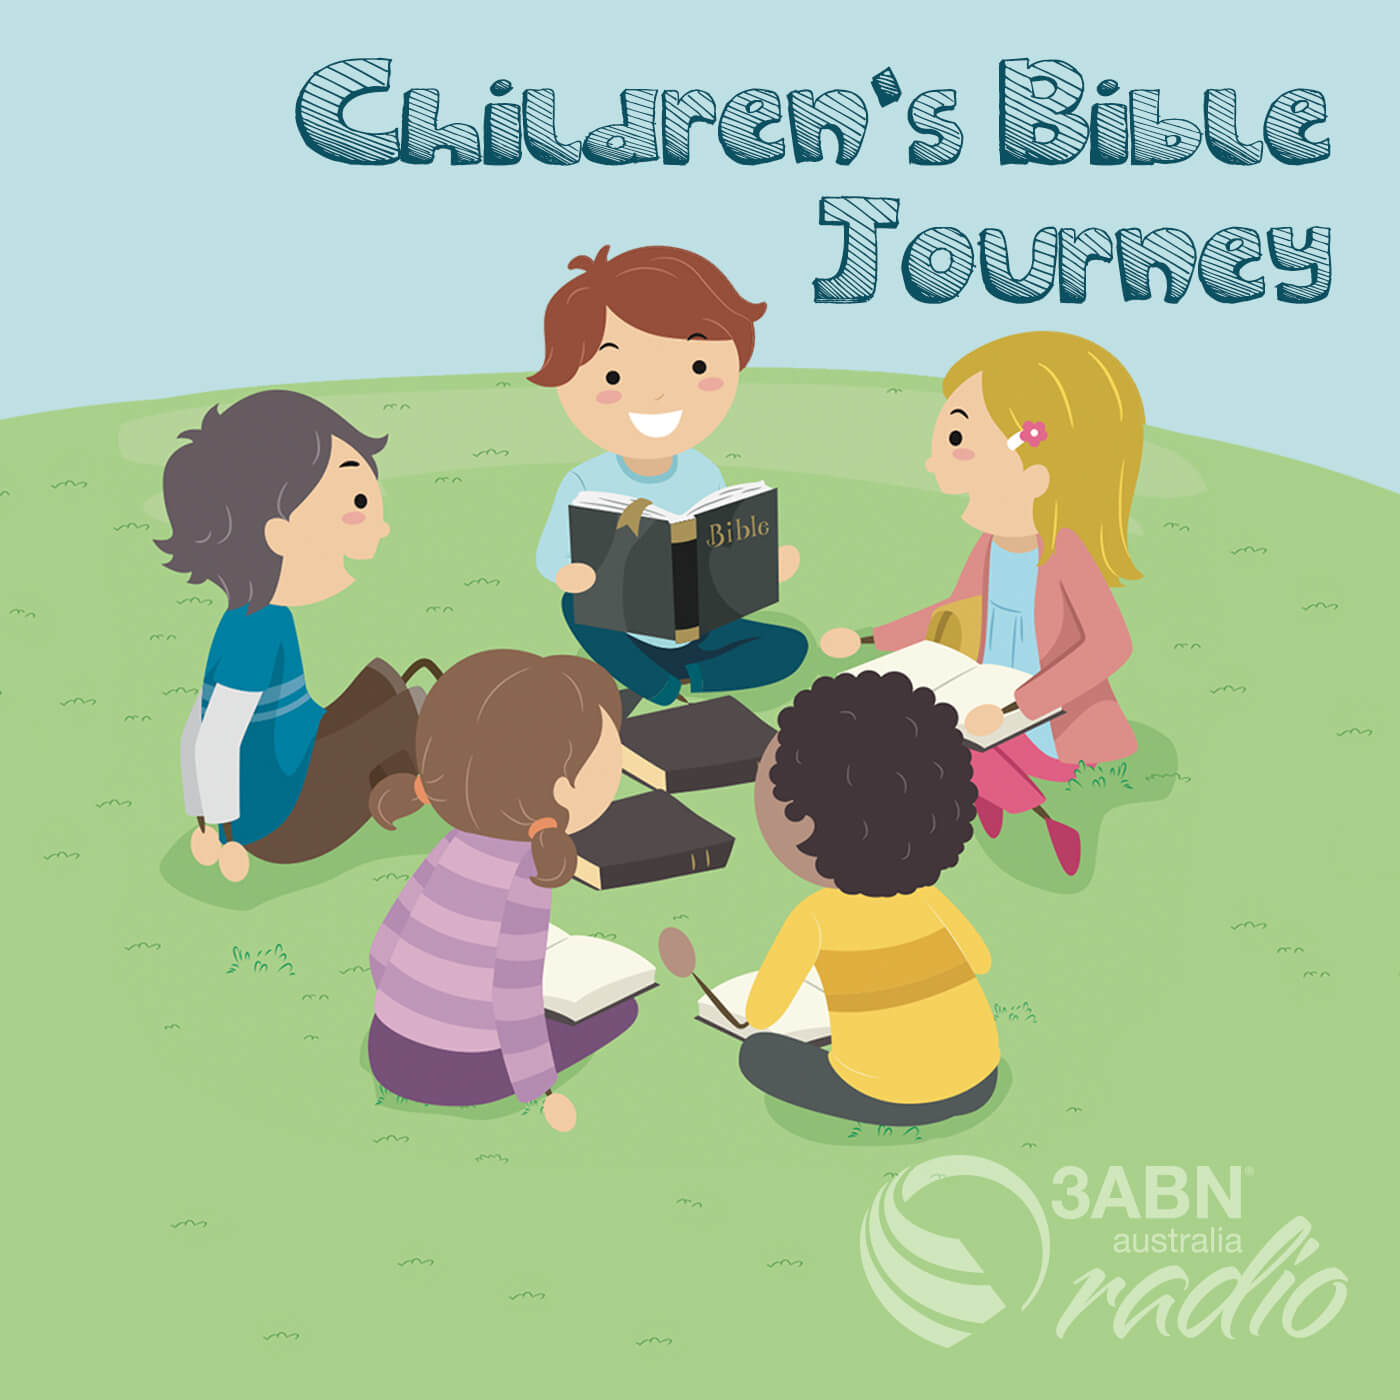 Children's Bible Journey - 2162